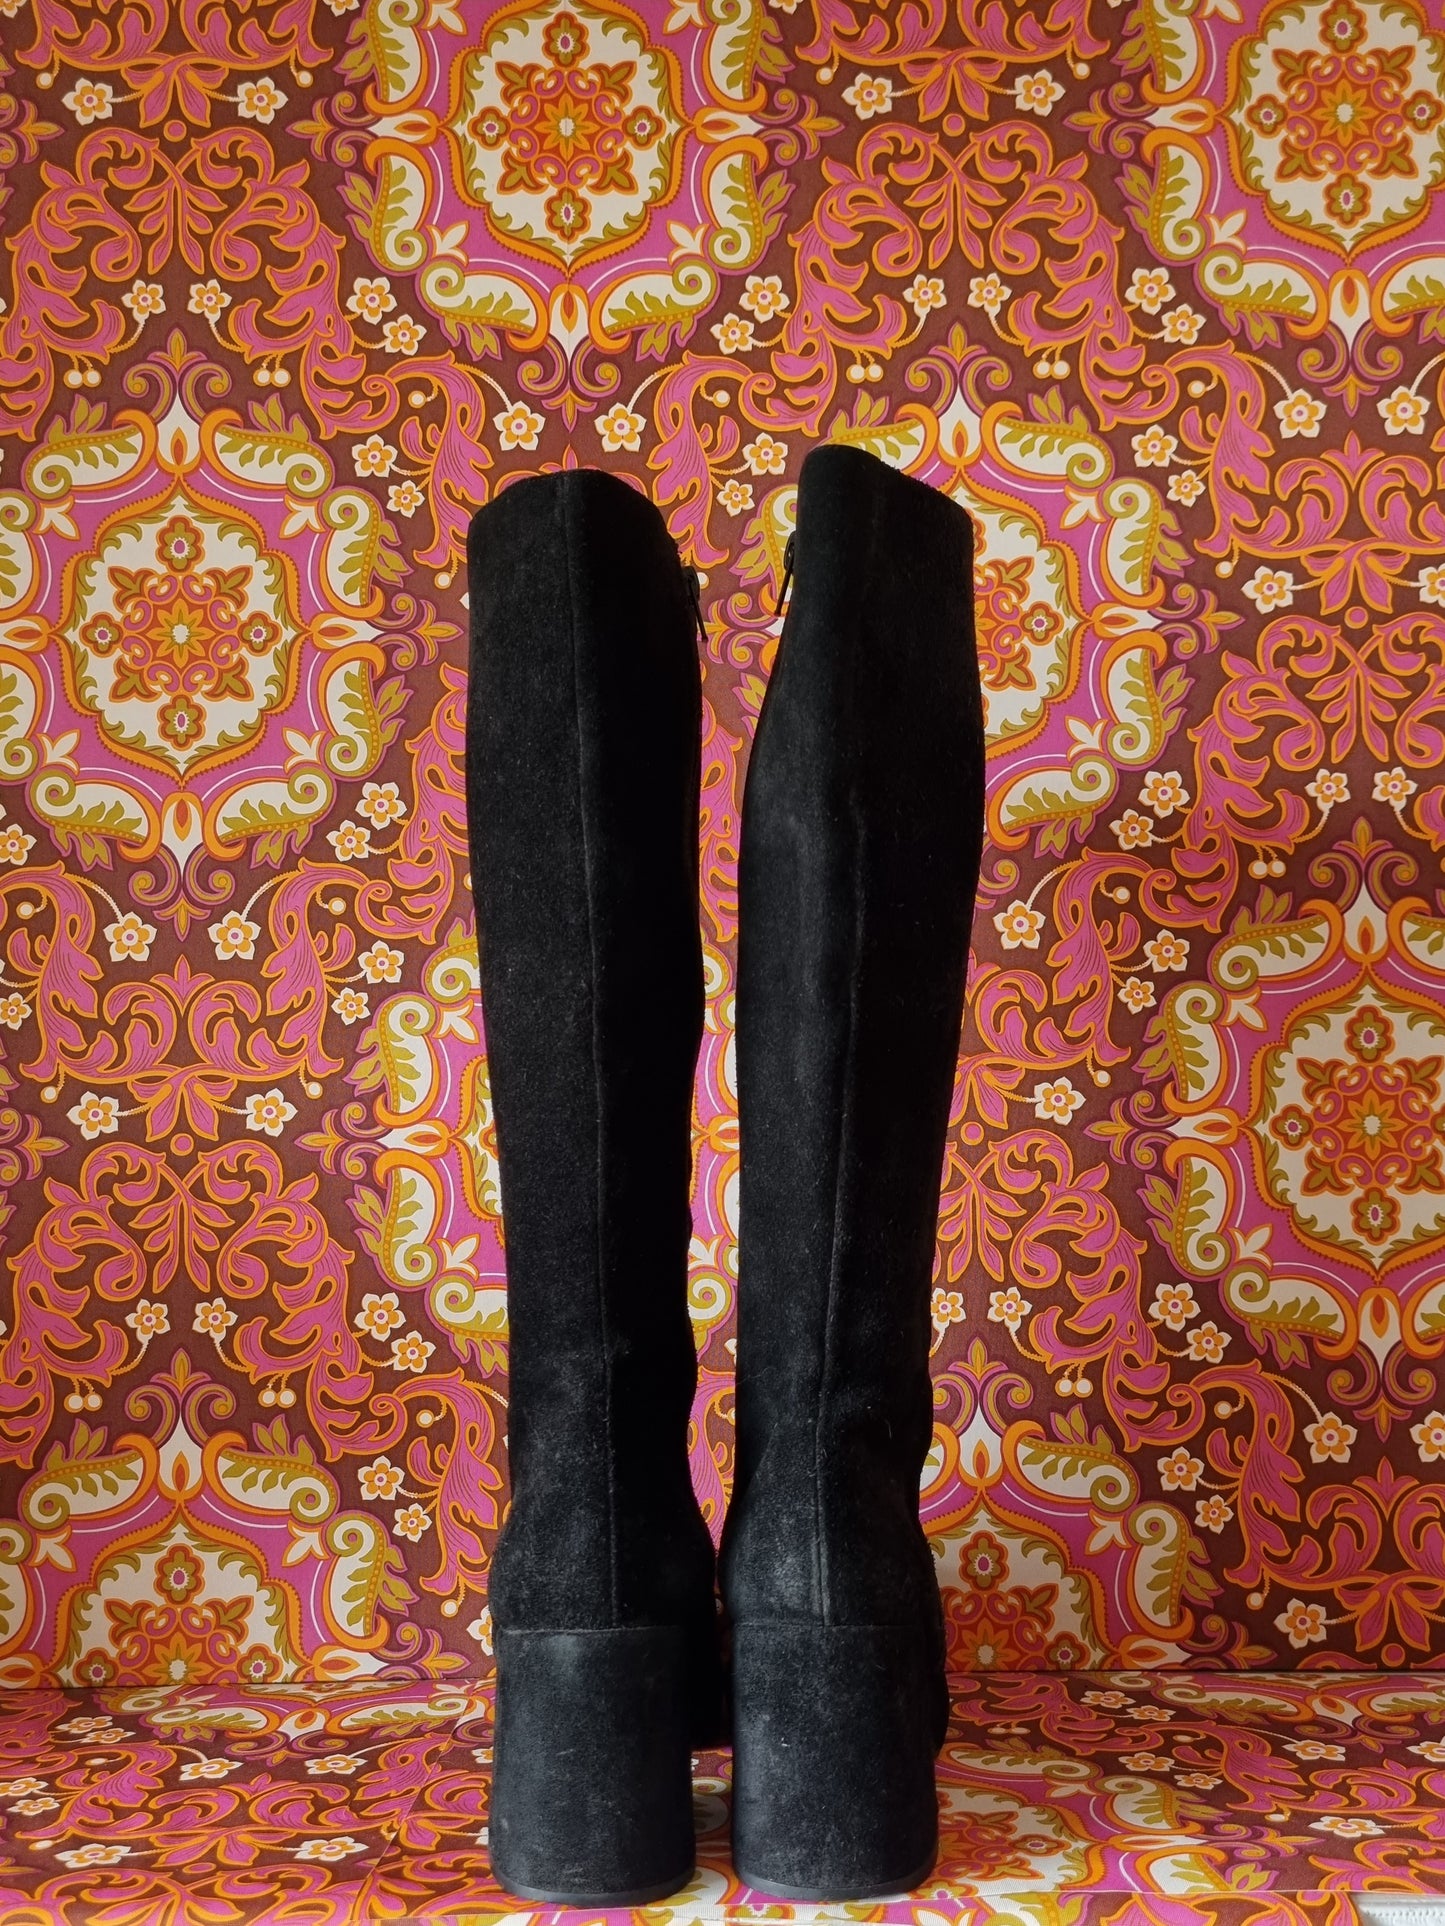 Vintage suede boots uk size 4 Eur 37 us 6